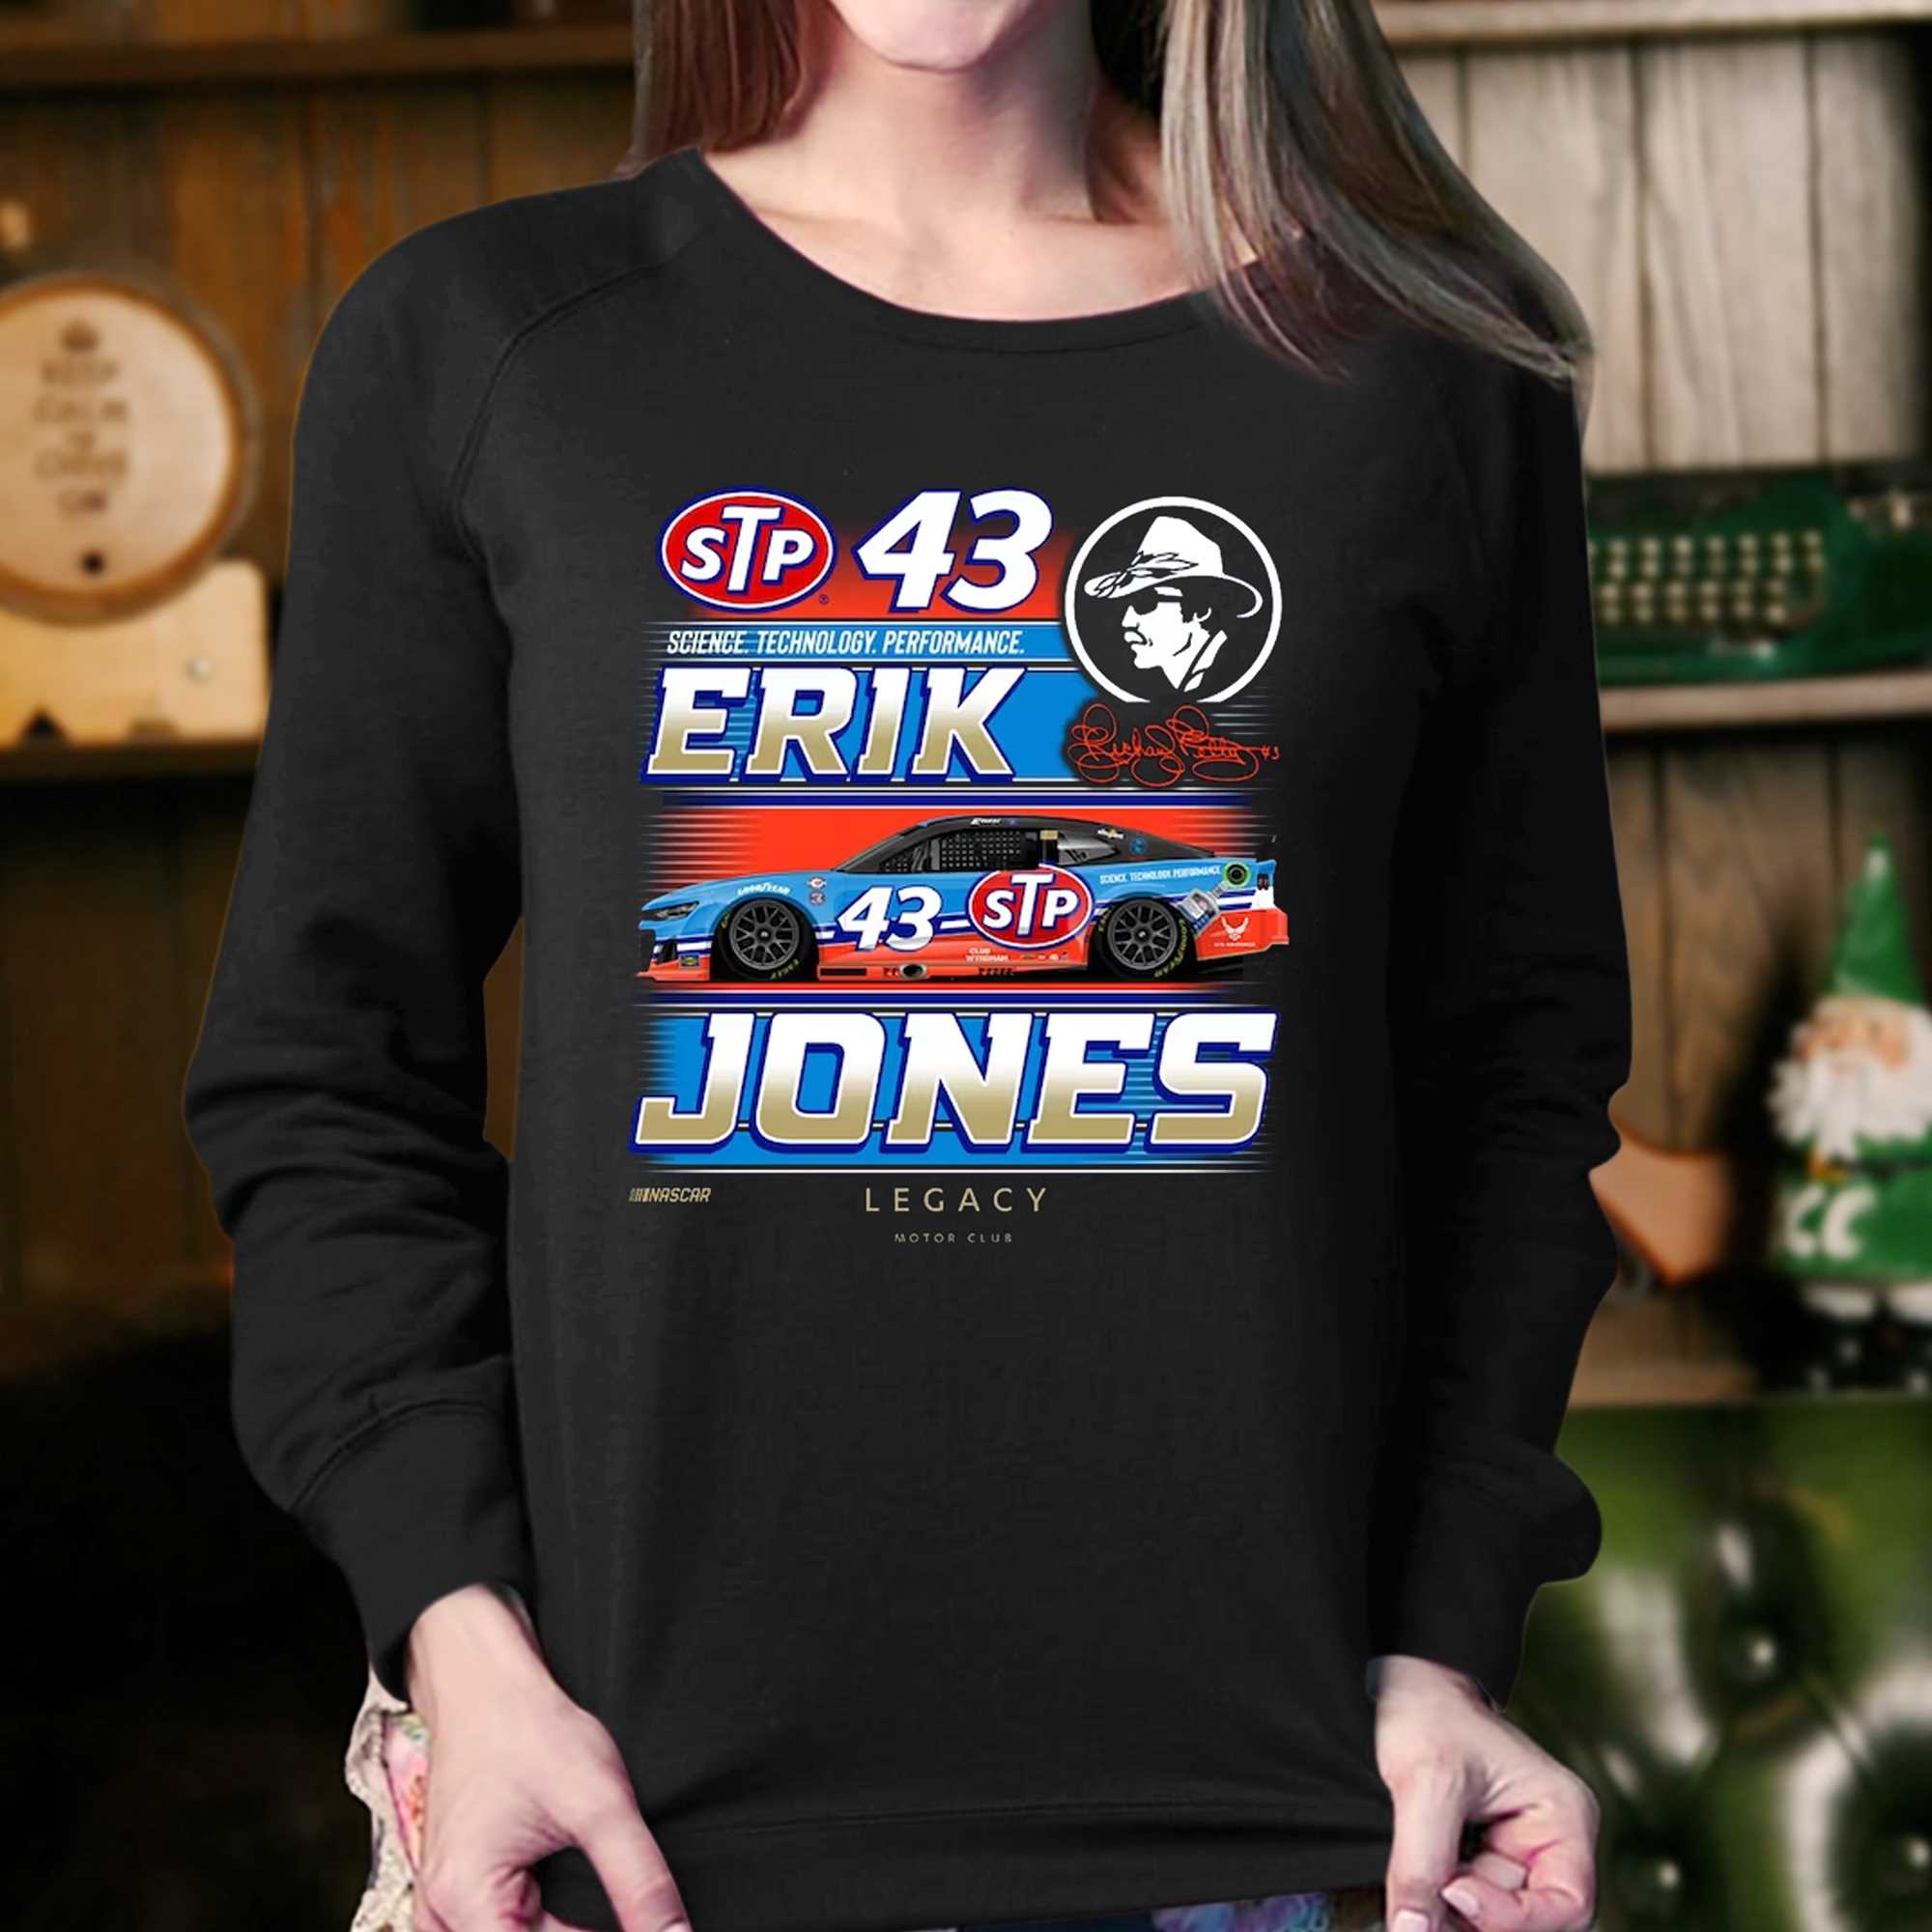 Erik Jones Legacy Motor Club Team Collection Stp T-shirt 